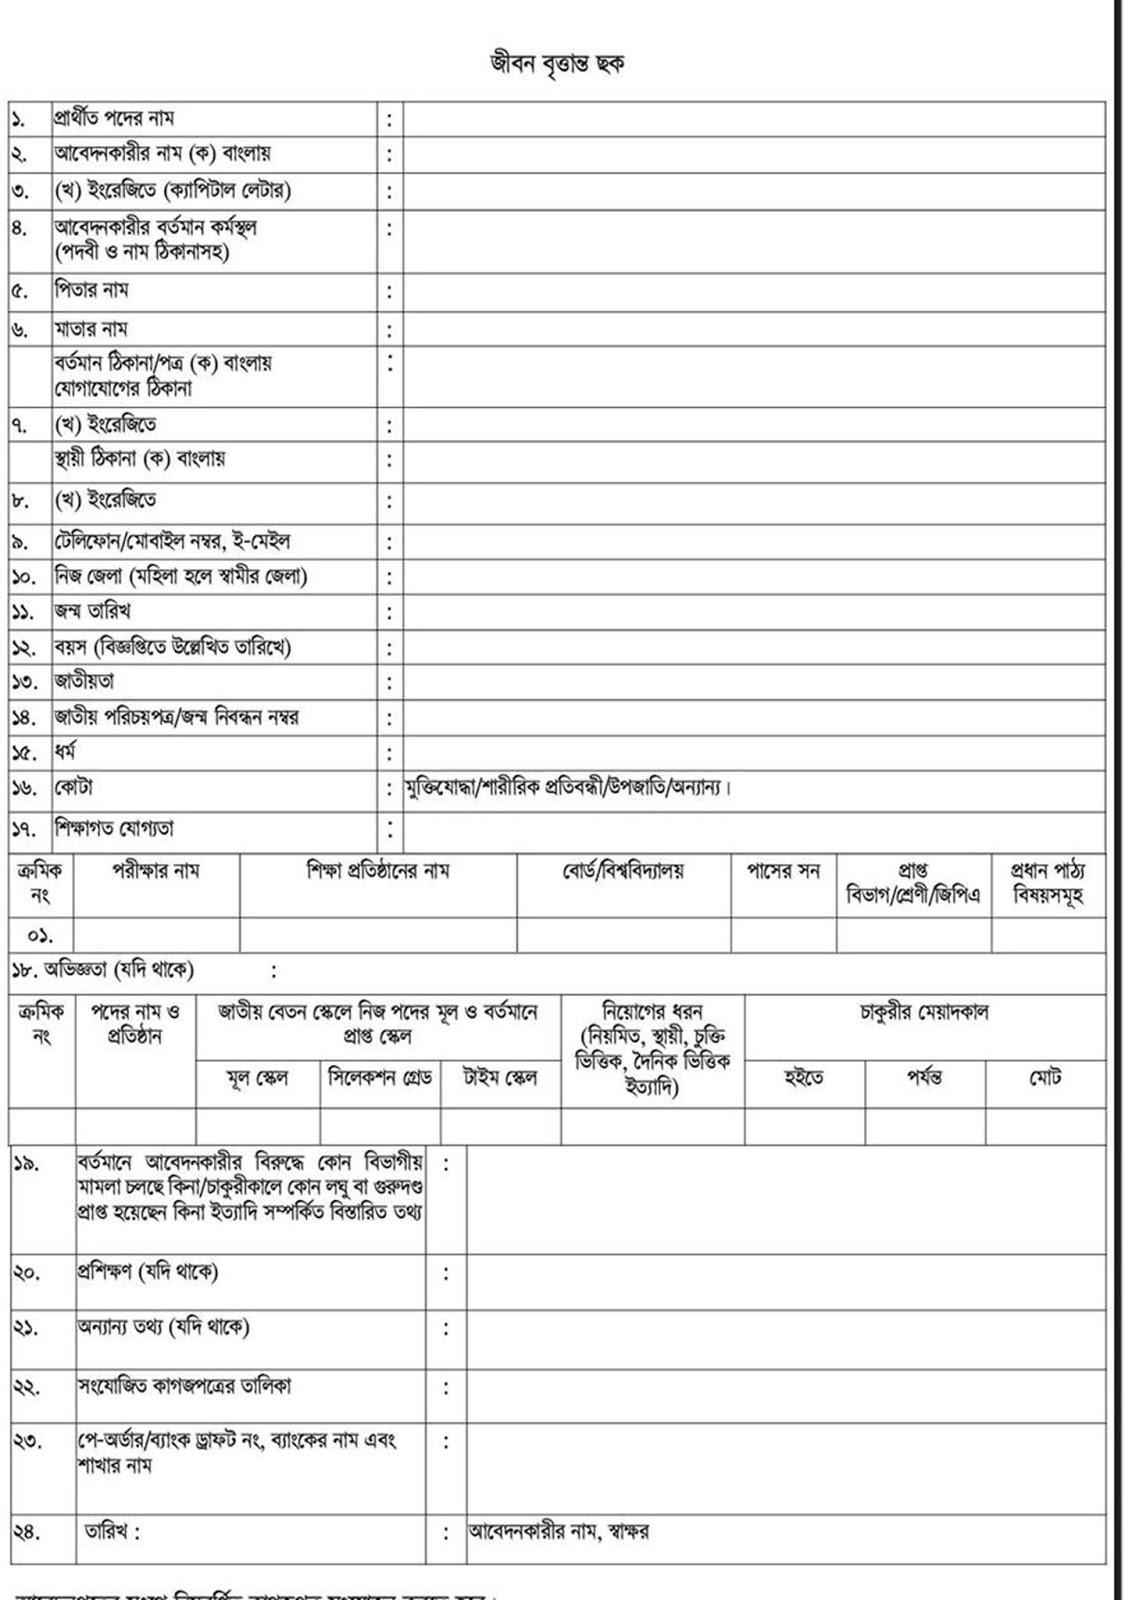 Rajshahi Medical University Jo Application Form